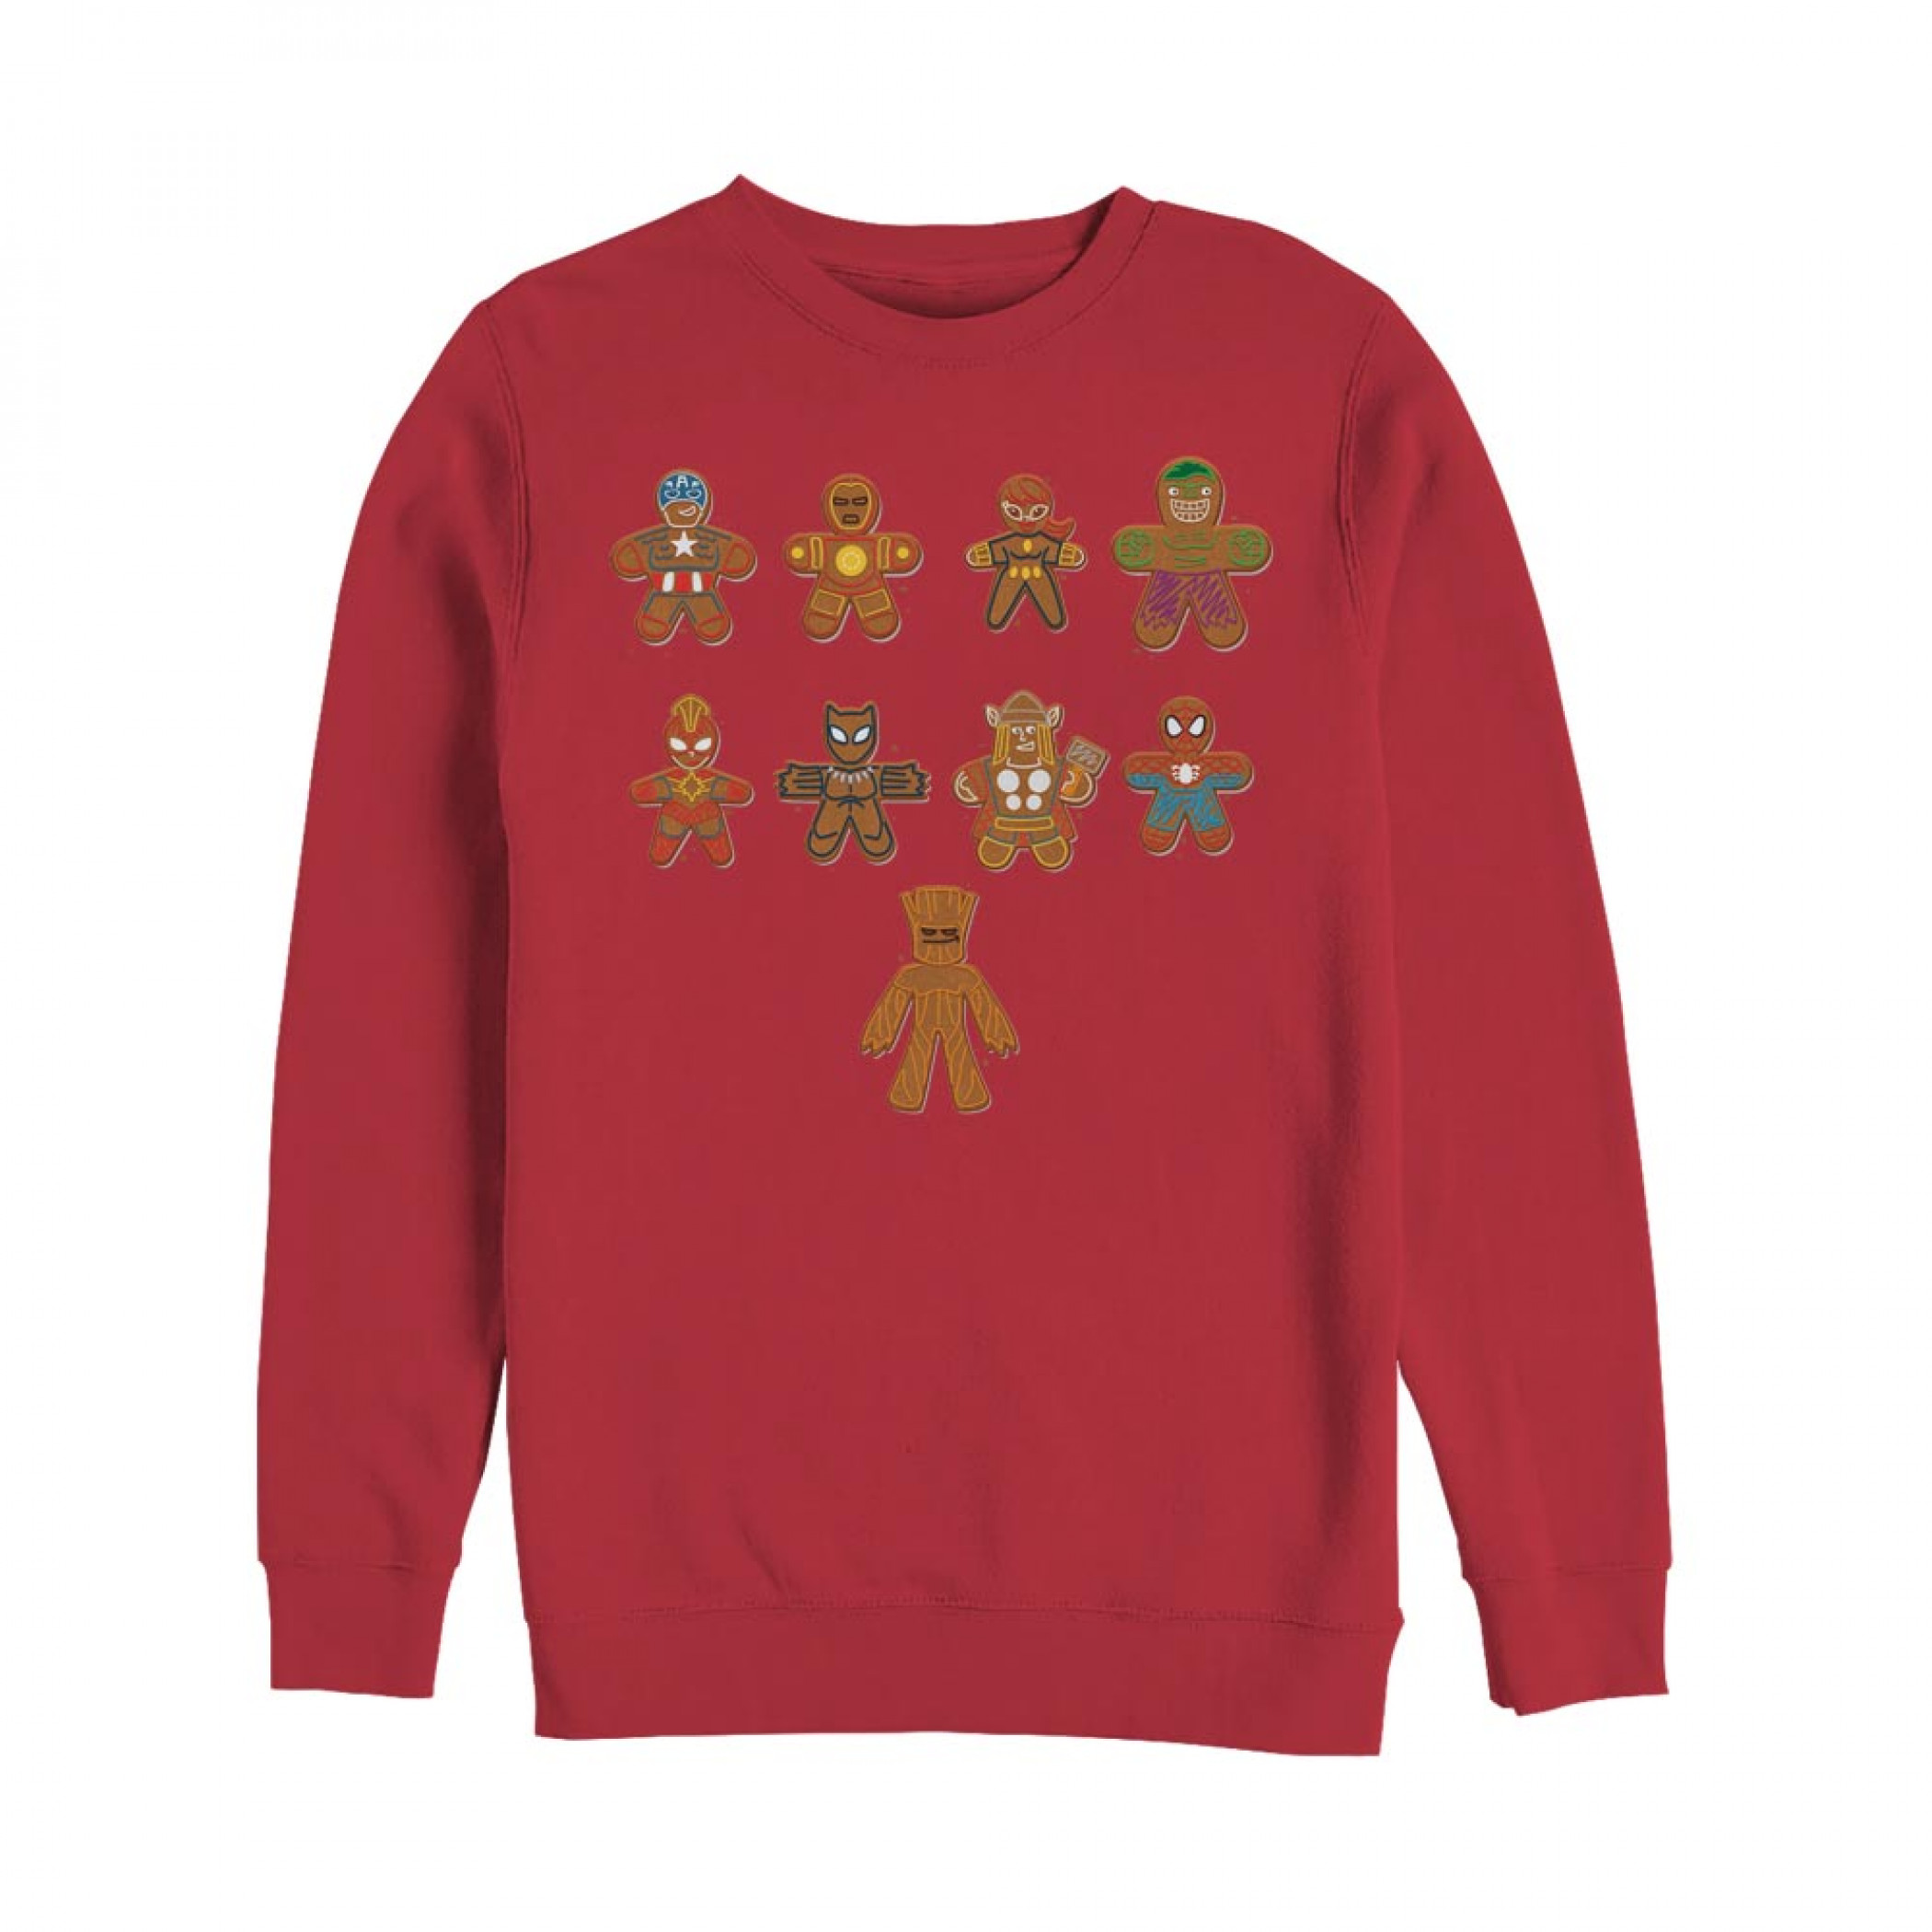 The Gingerbread Cookie Avengers Christmas Sweatshirt